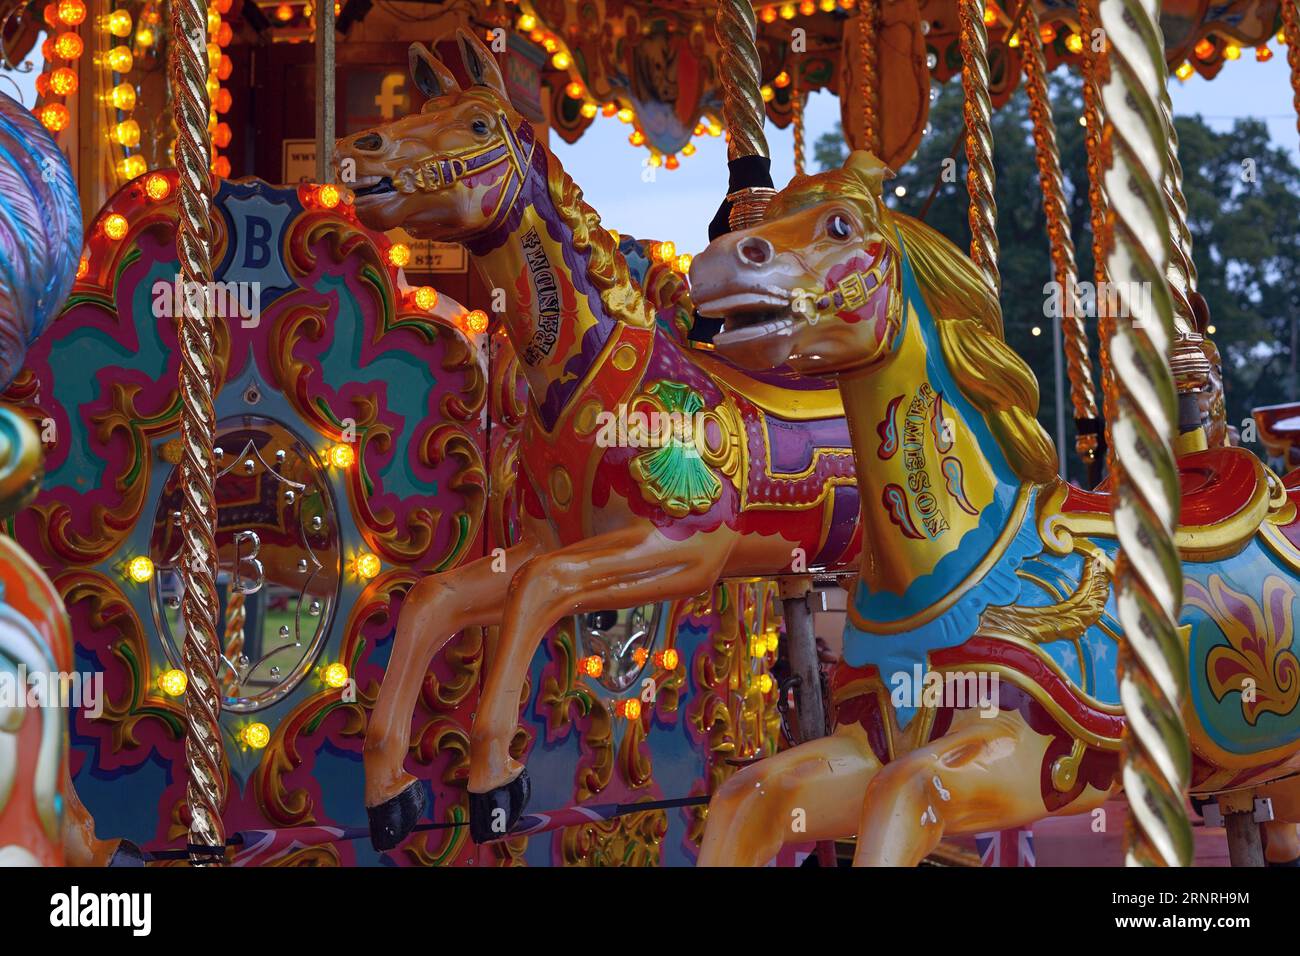 horses on a merry go round, a British fairground ride Stock Photo